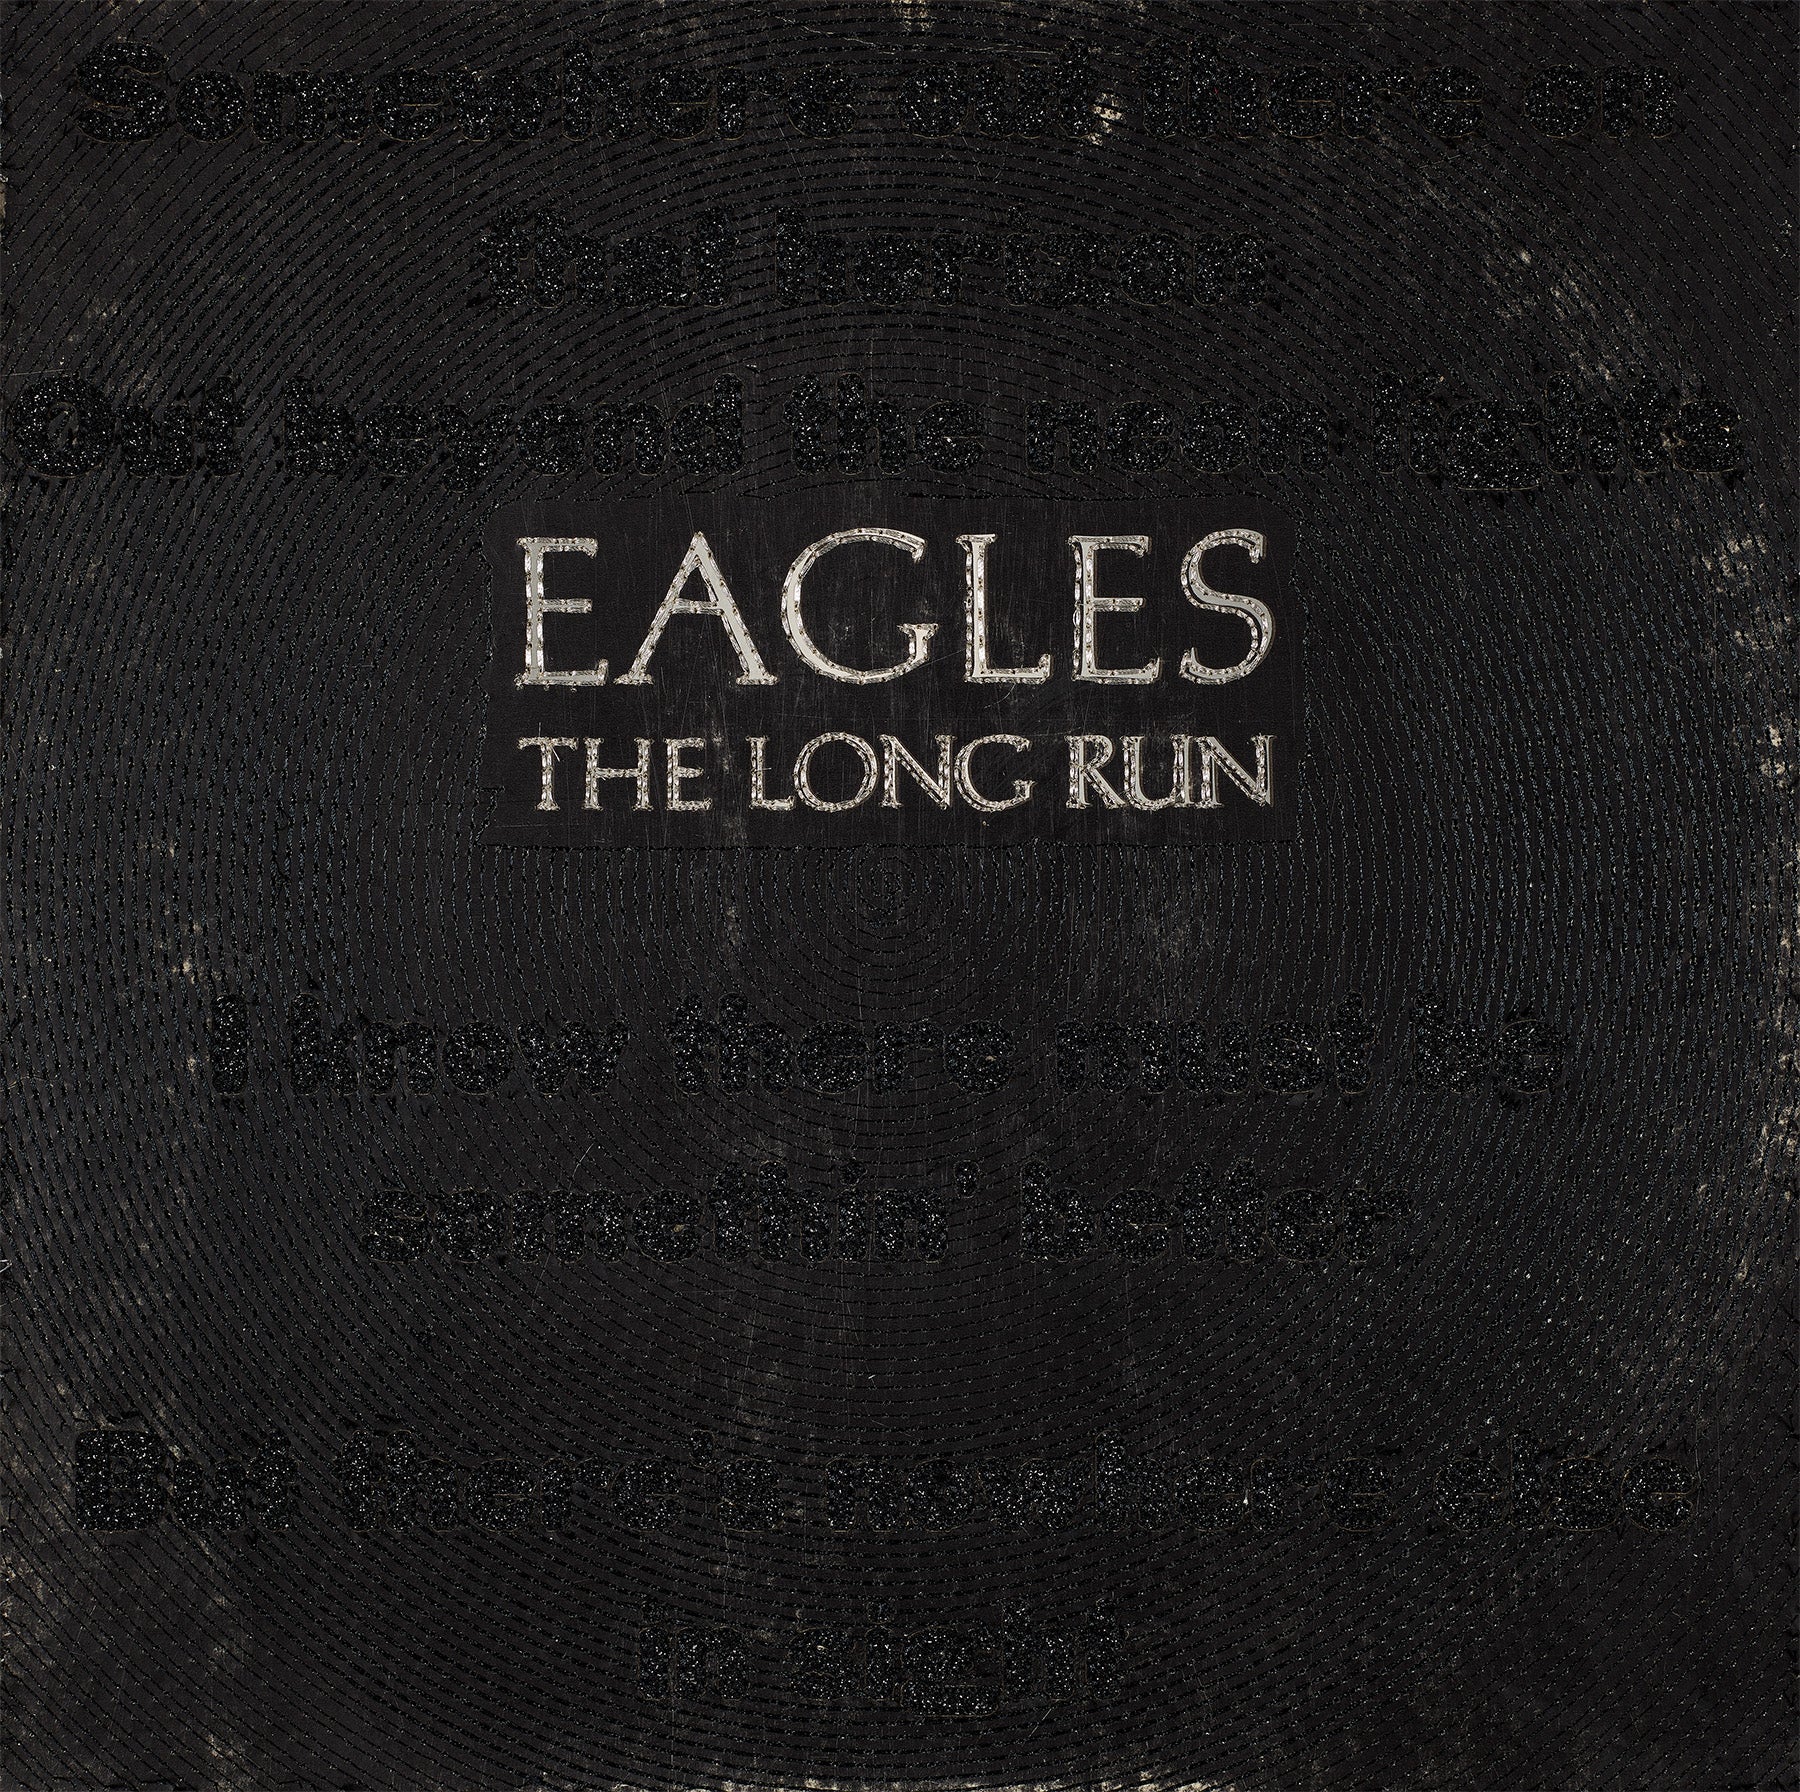 The Eagles, The Long Run – Stephen Wilson Studio